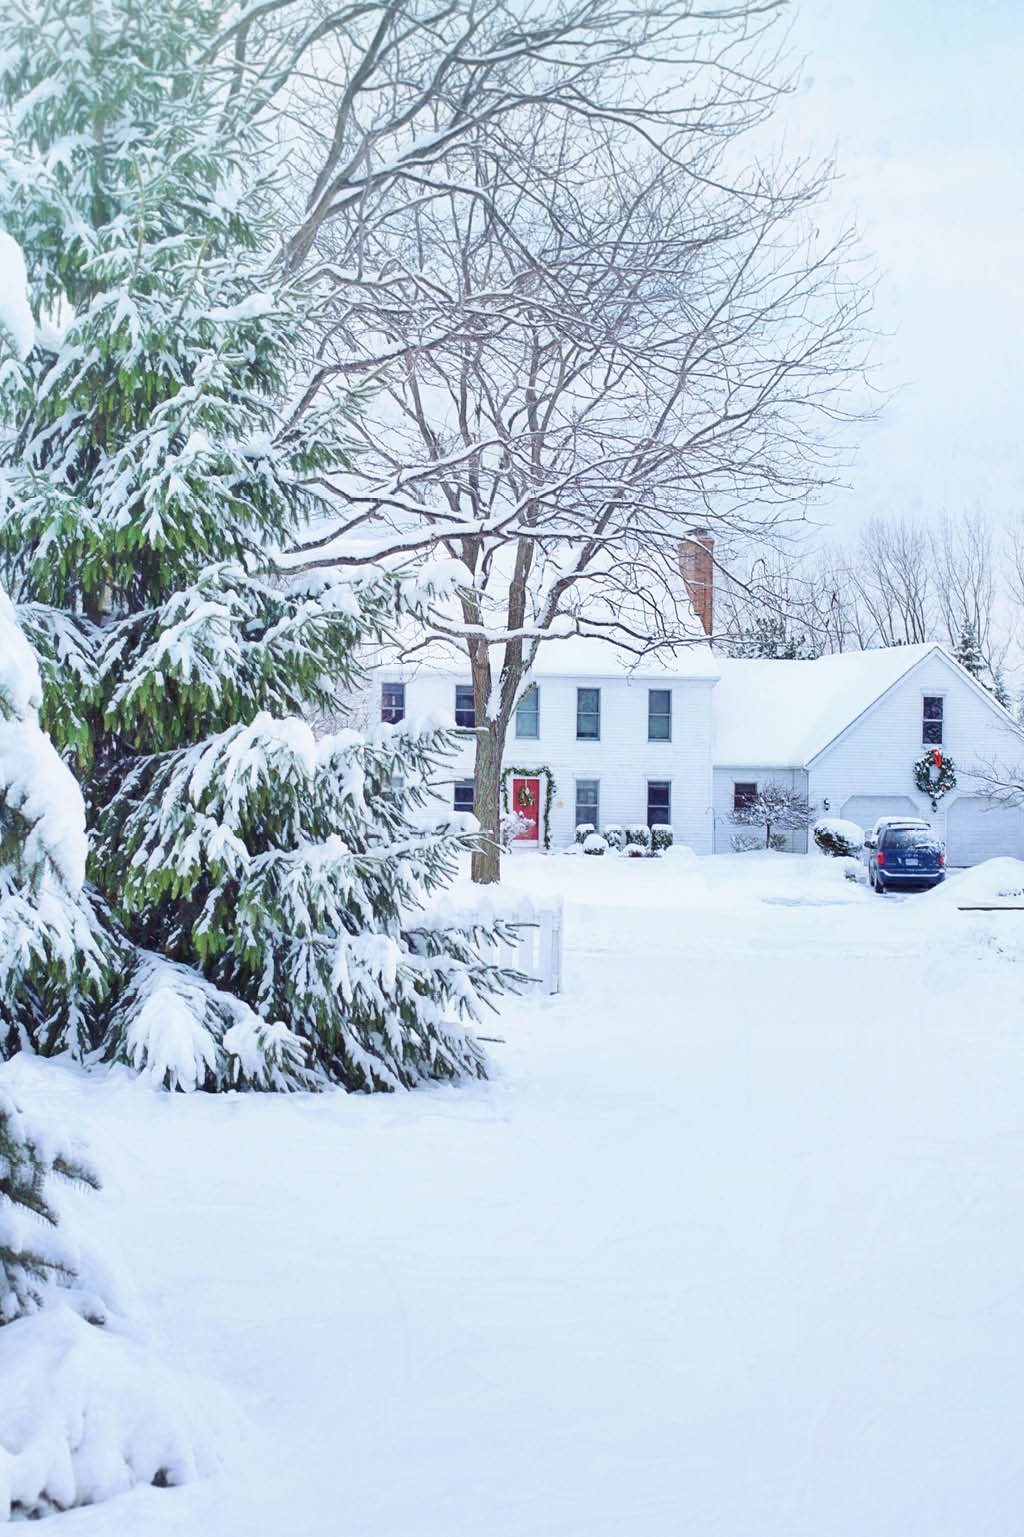 Snowy scene outside residential home